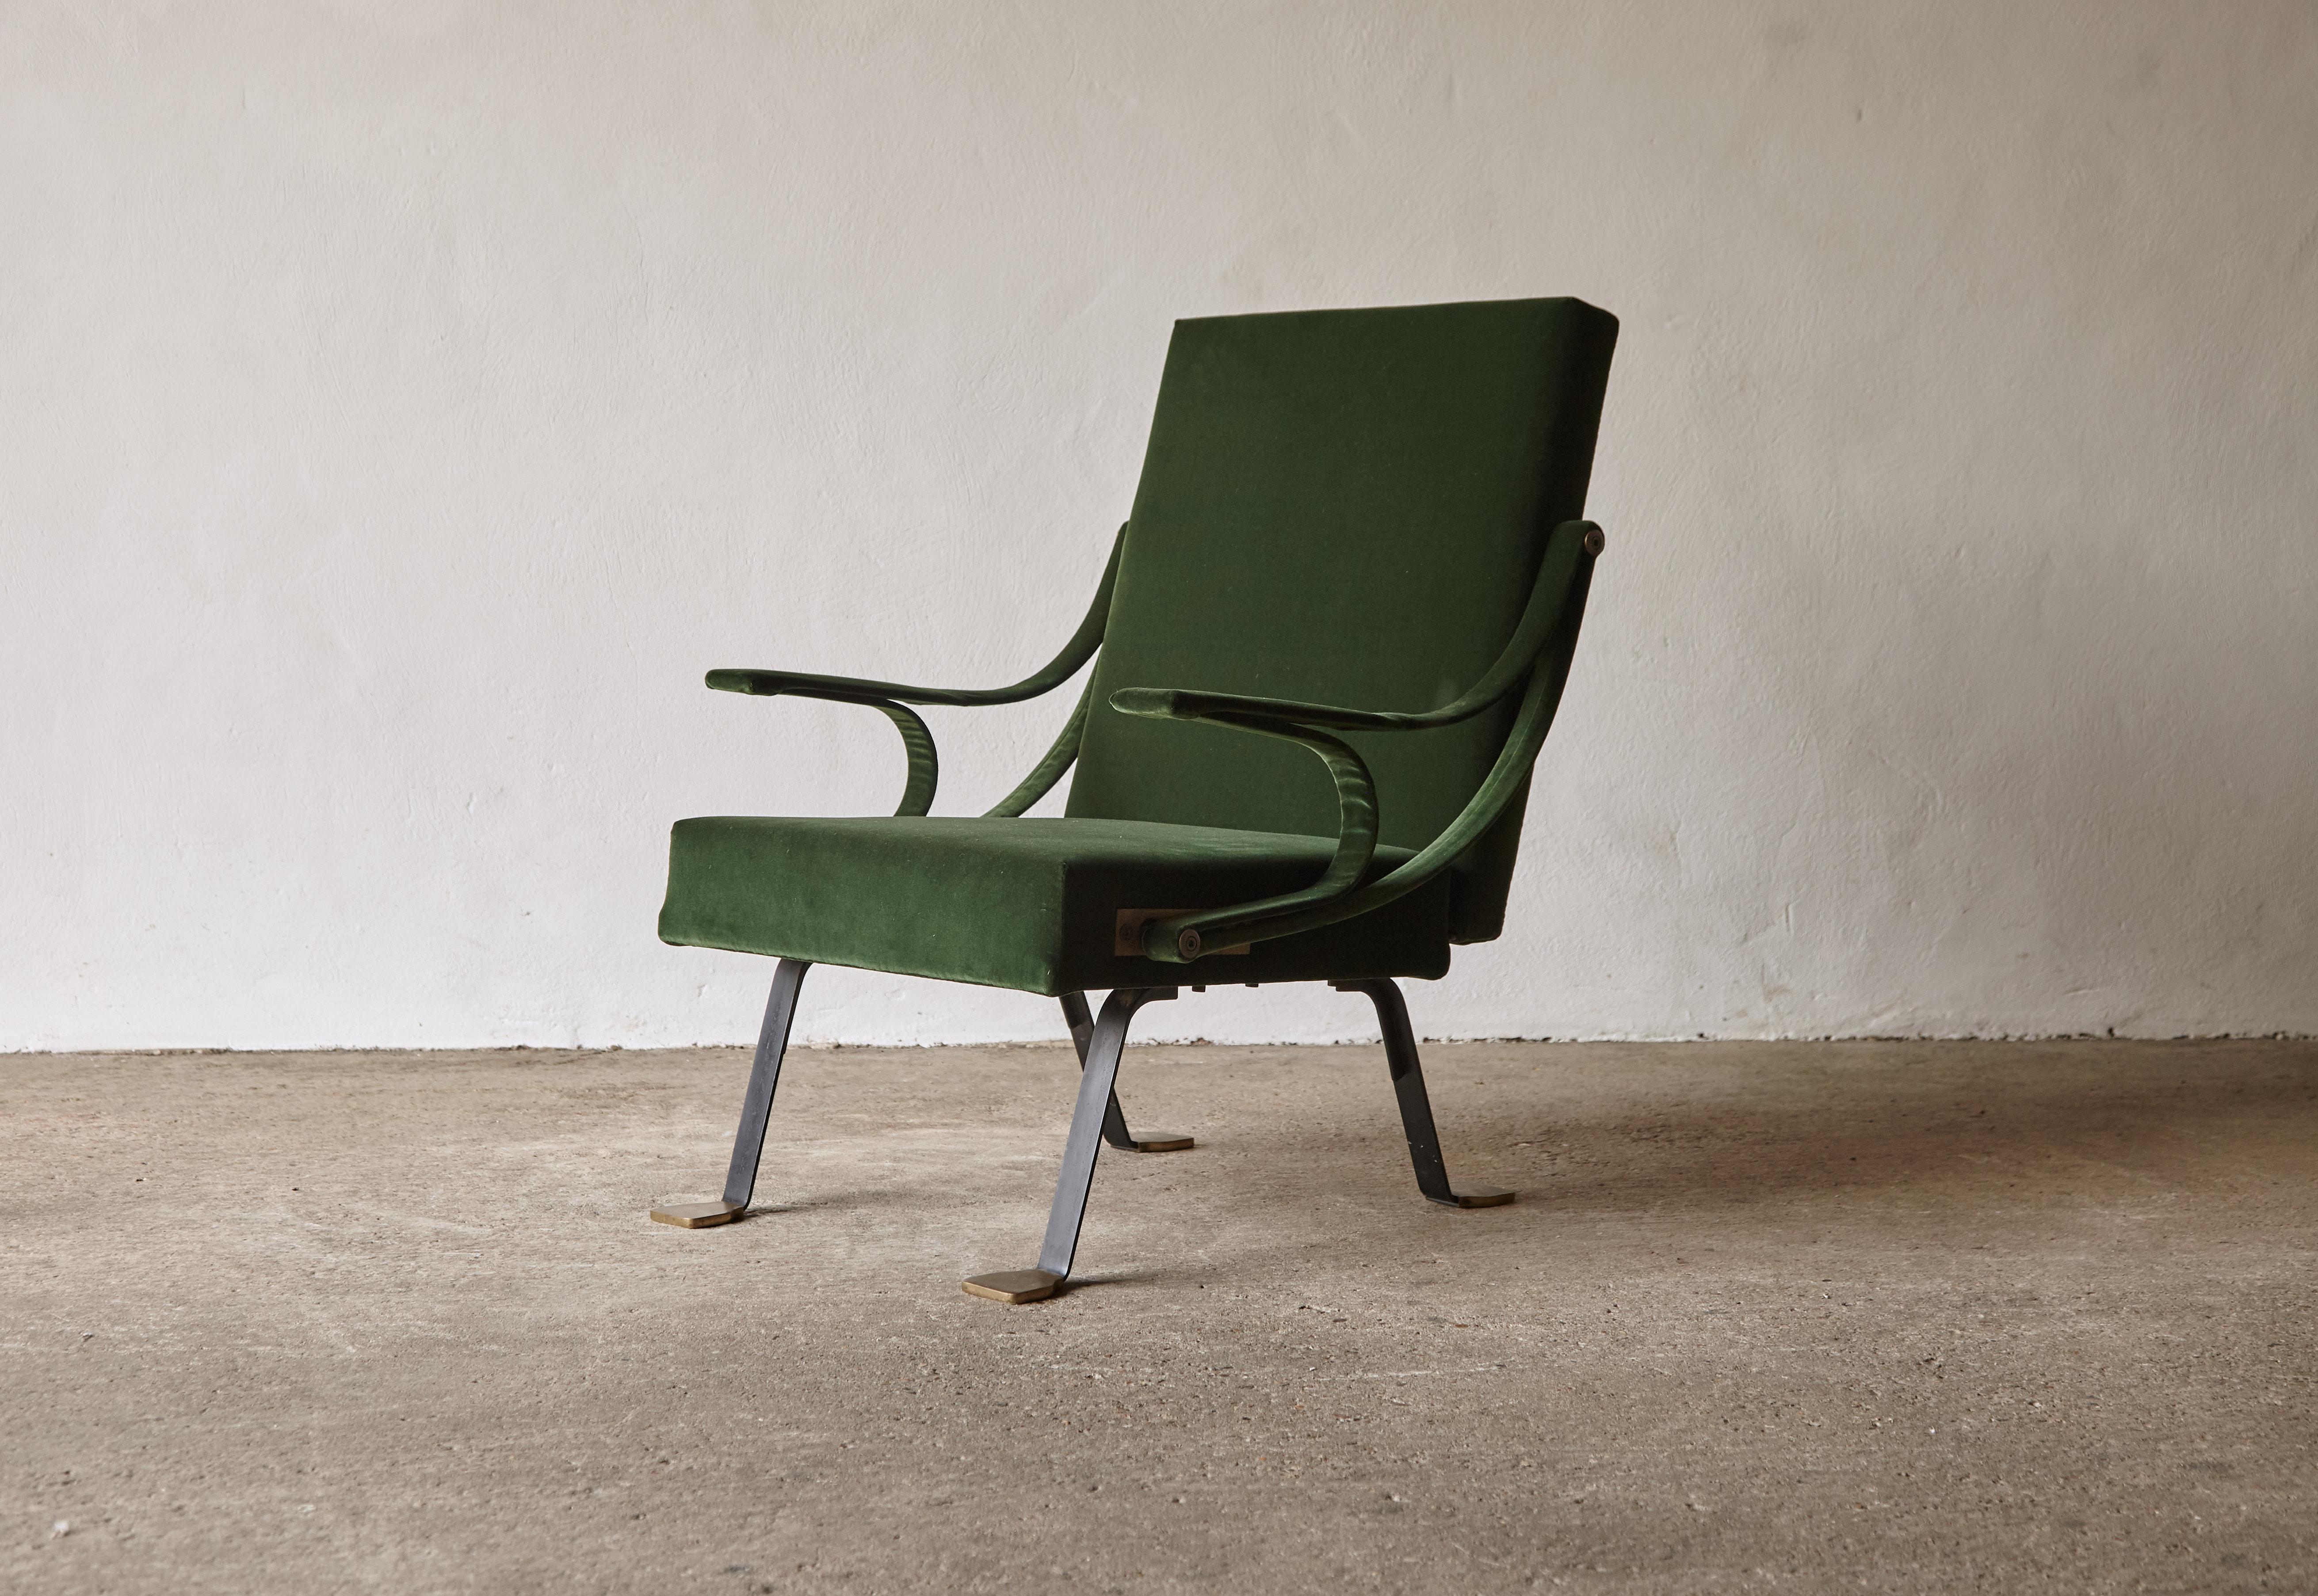 20th Century Original Ignazio Gardella Reclining Digamma Chair, 1960s, Italy For Sale